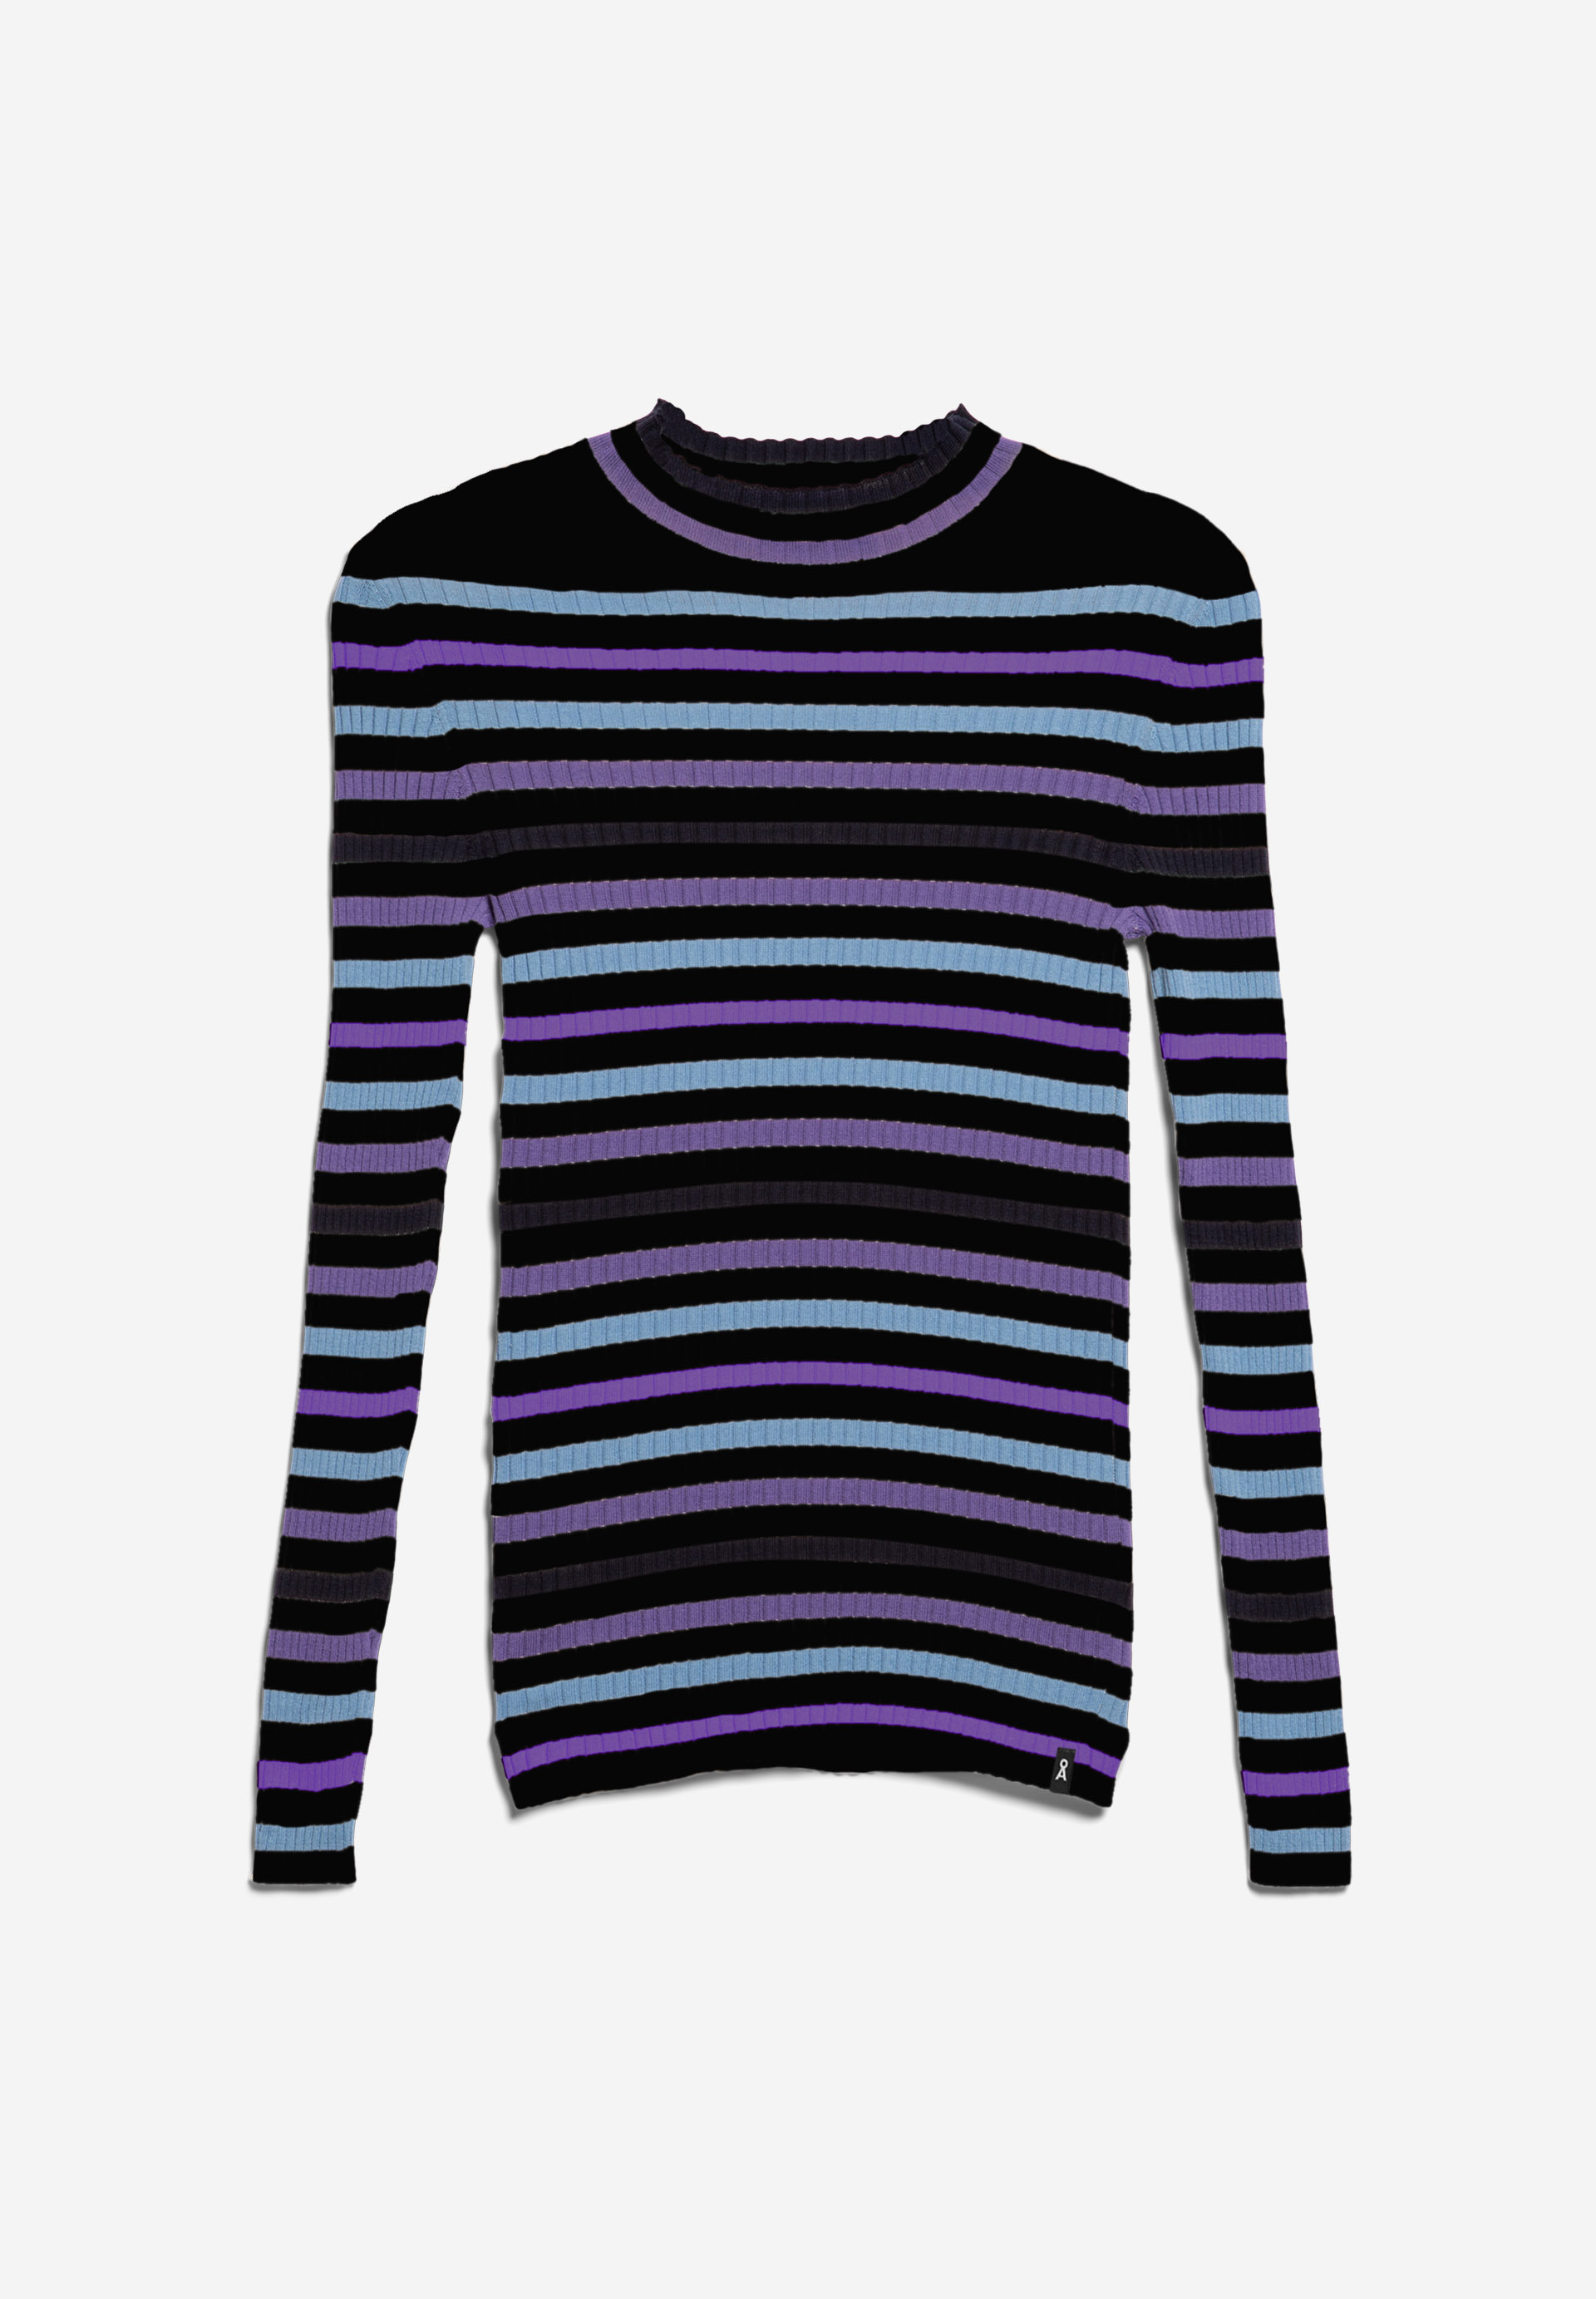 ALAANIA MULTICOLOR 2.0 Sweater Slim Fit made of Organic Cotton